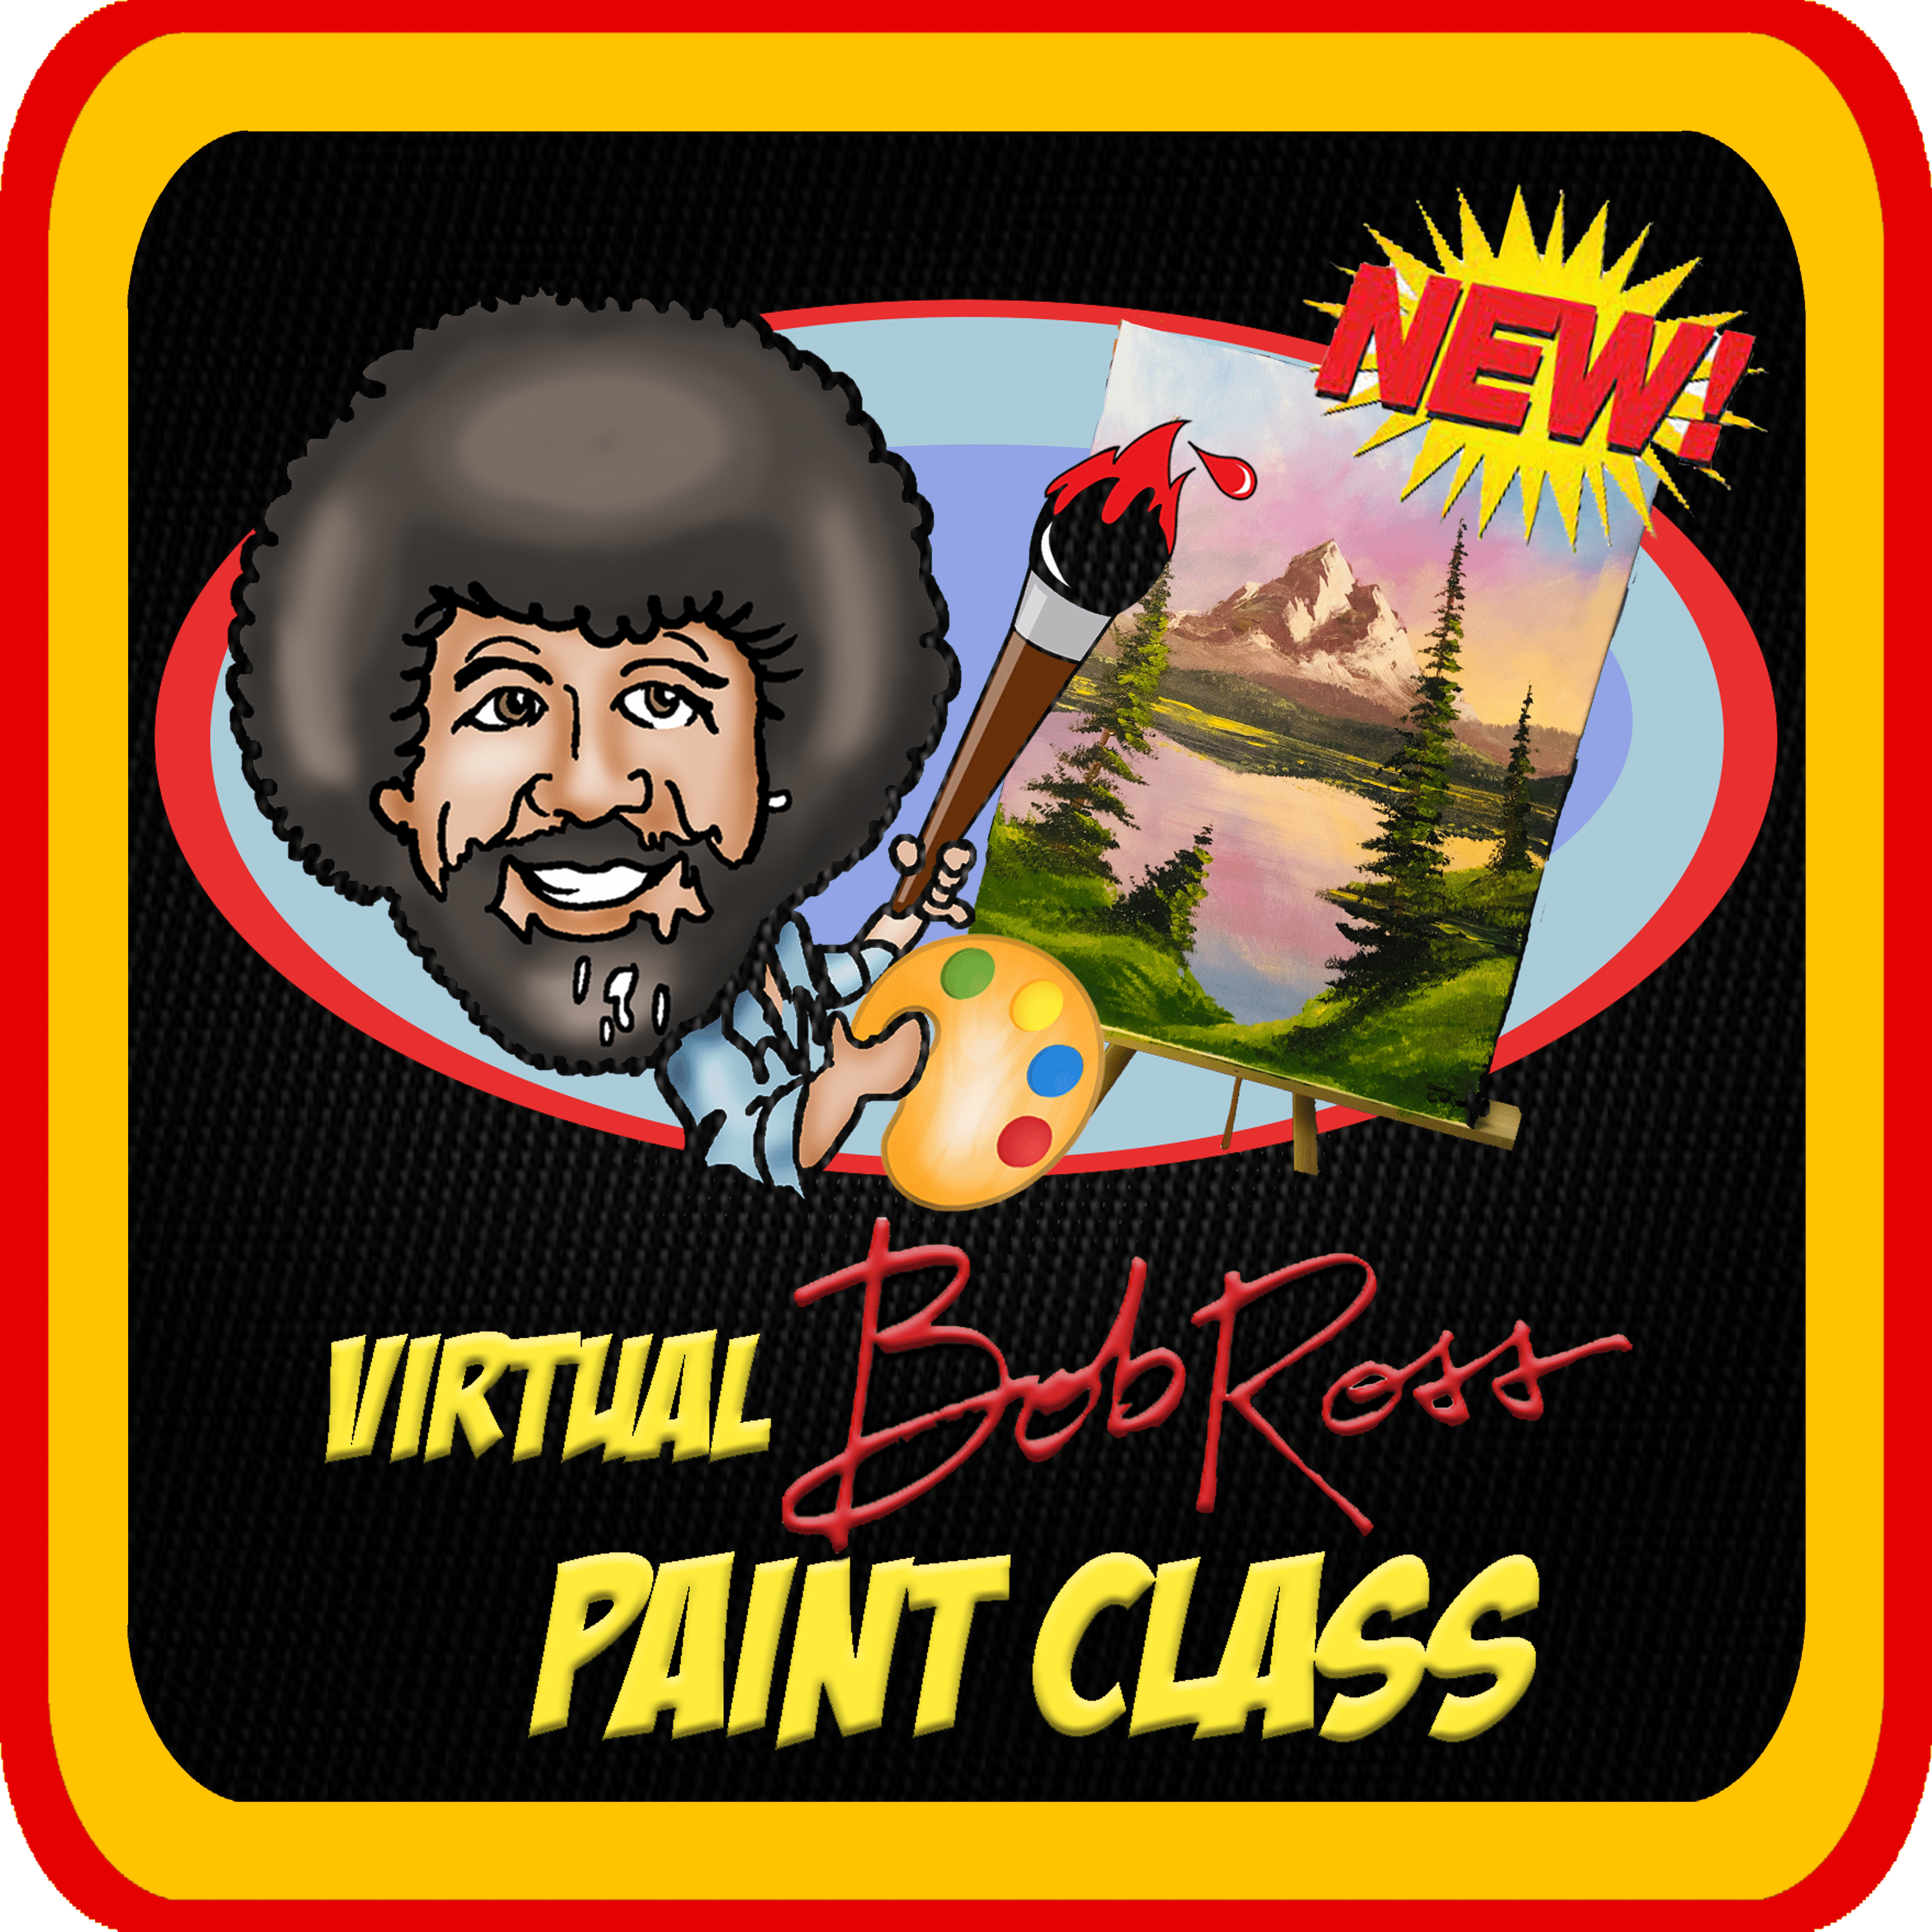 Virtual Bob Ross Painting Class, Virtual Bob Ross, Zoom Paint Class, Bob Ross, Virtual Paint Class, Virtual Team Building, Remote Team Building, Virtual Entertainment, Virtual Party Ideas